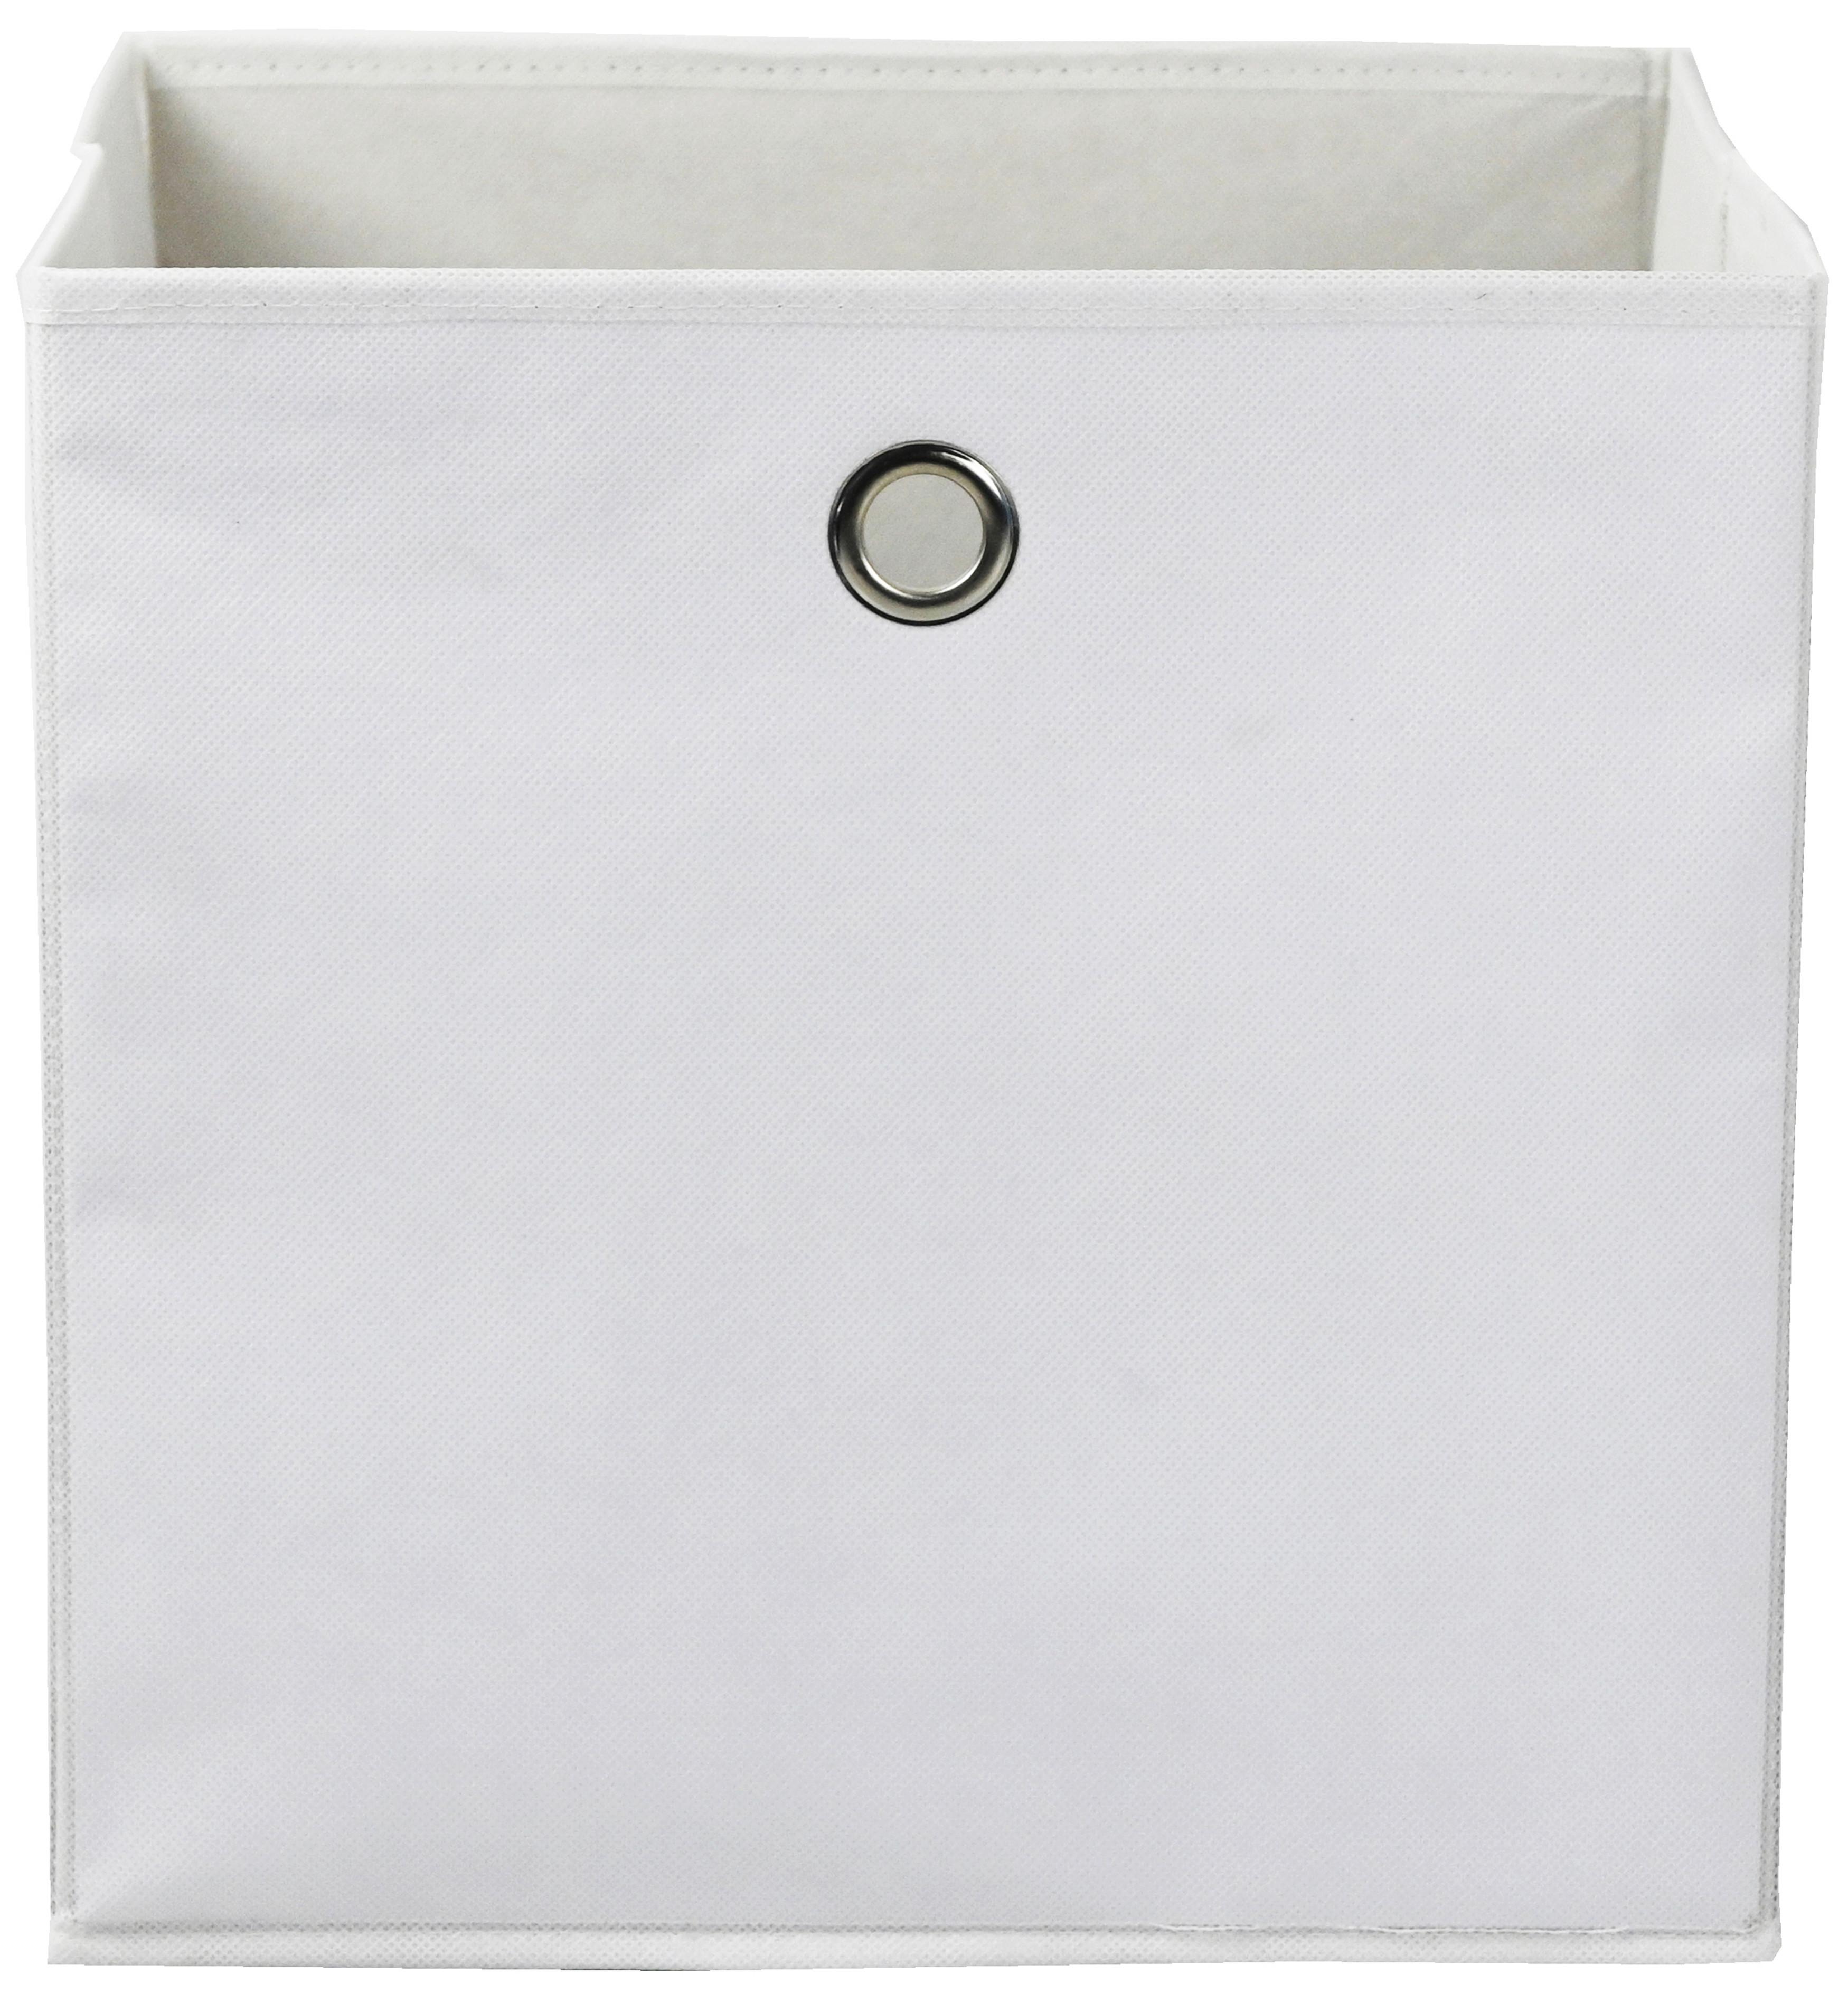 Skládací Krabice Fibi -Ext- - bílá, Konvenční, karton/textil (30/30/30cm) - Modern Living